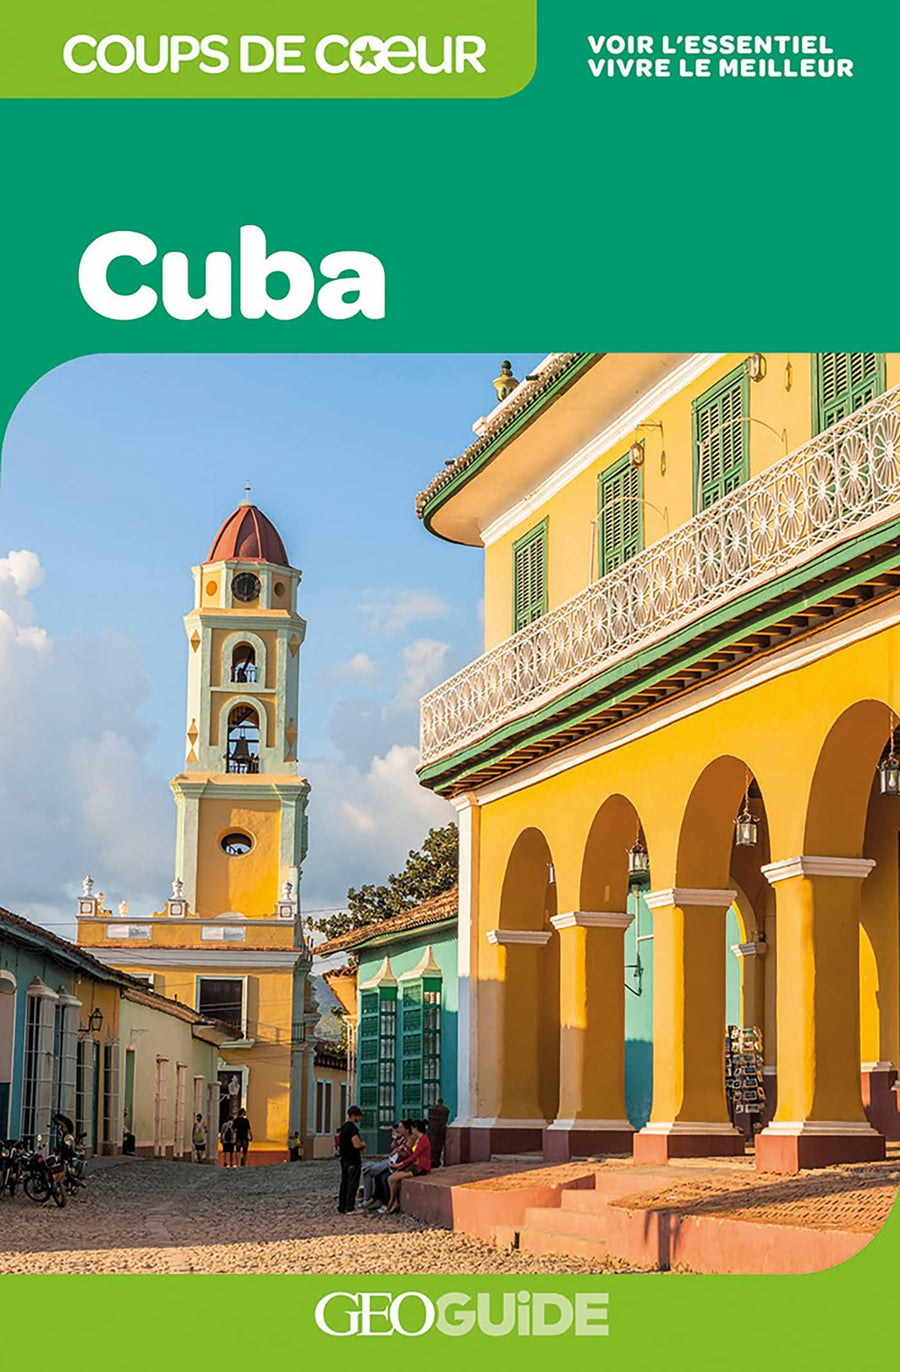 Géoguide (coups de coeur) - Cuba | Gallimard guide de voyage Gallimard 